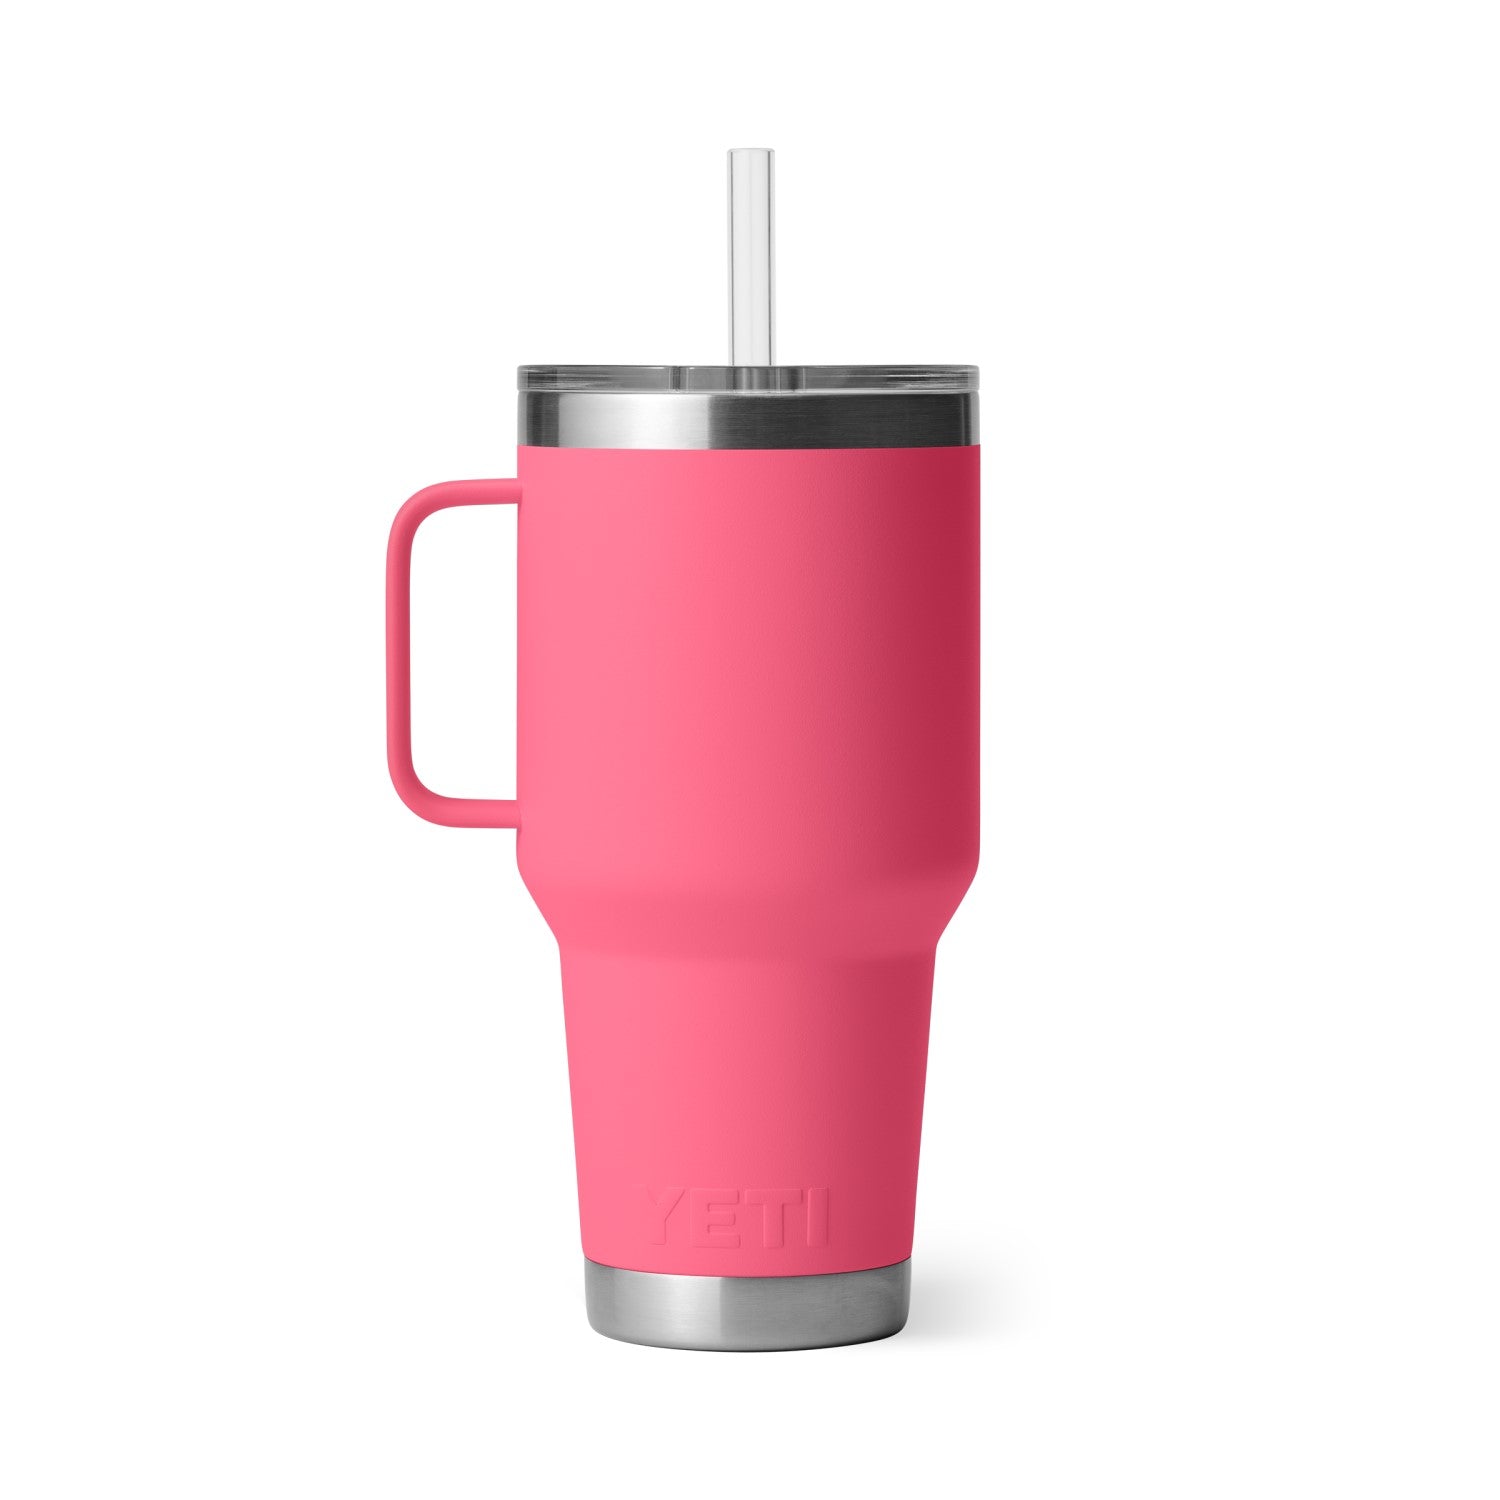 Yeti Rambler 35oz Mug With Straw Lid Tropical Pink